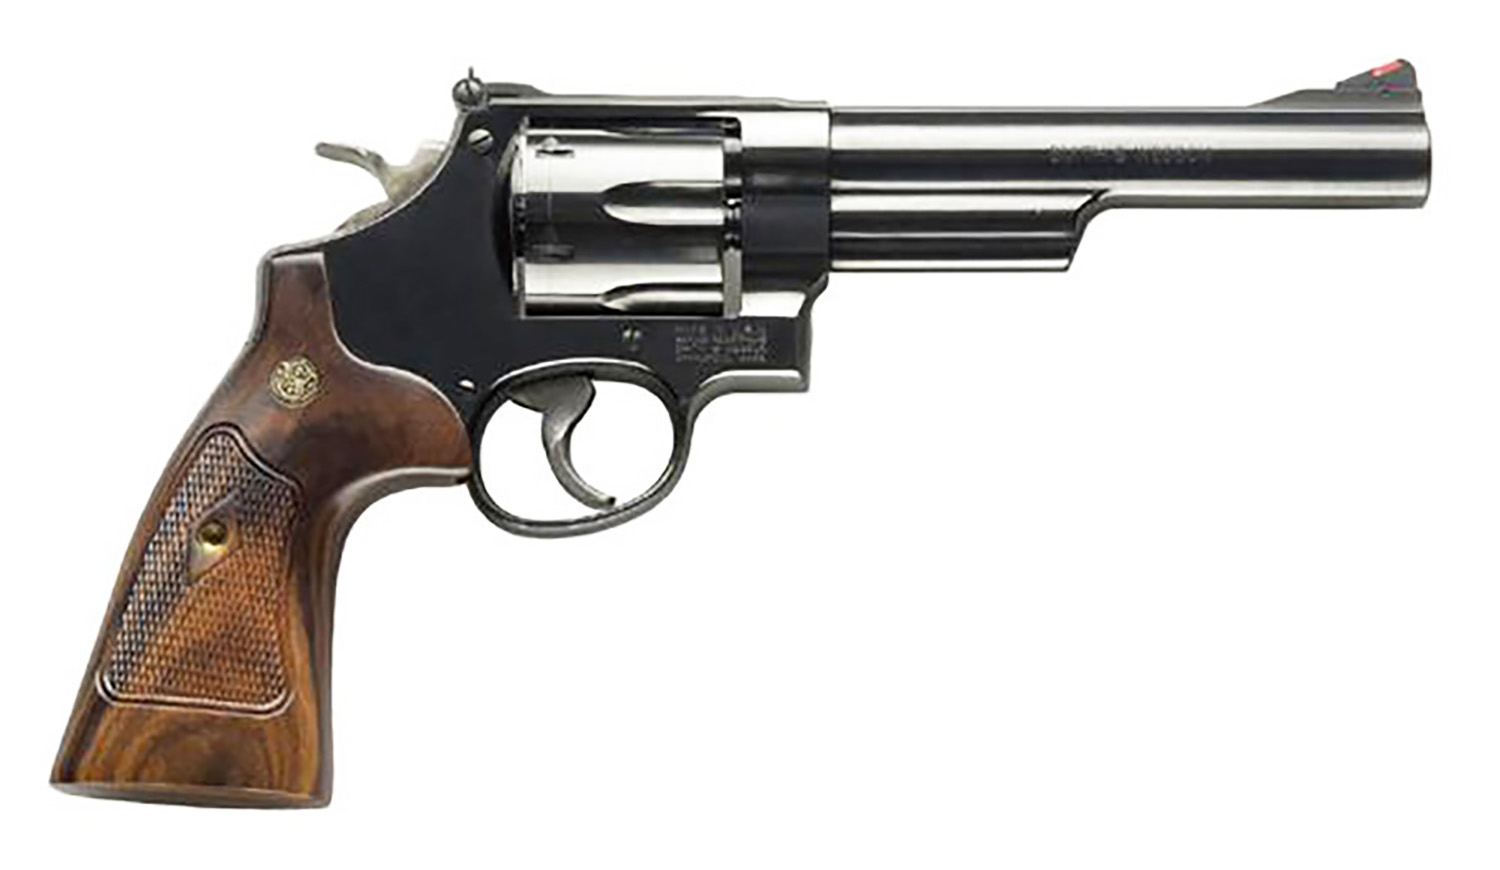 Réplica Revolver Co2 M&P R8 Cal 4.5  Nueva Armeria Tarapaca - GLOCK STORE